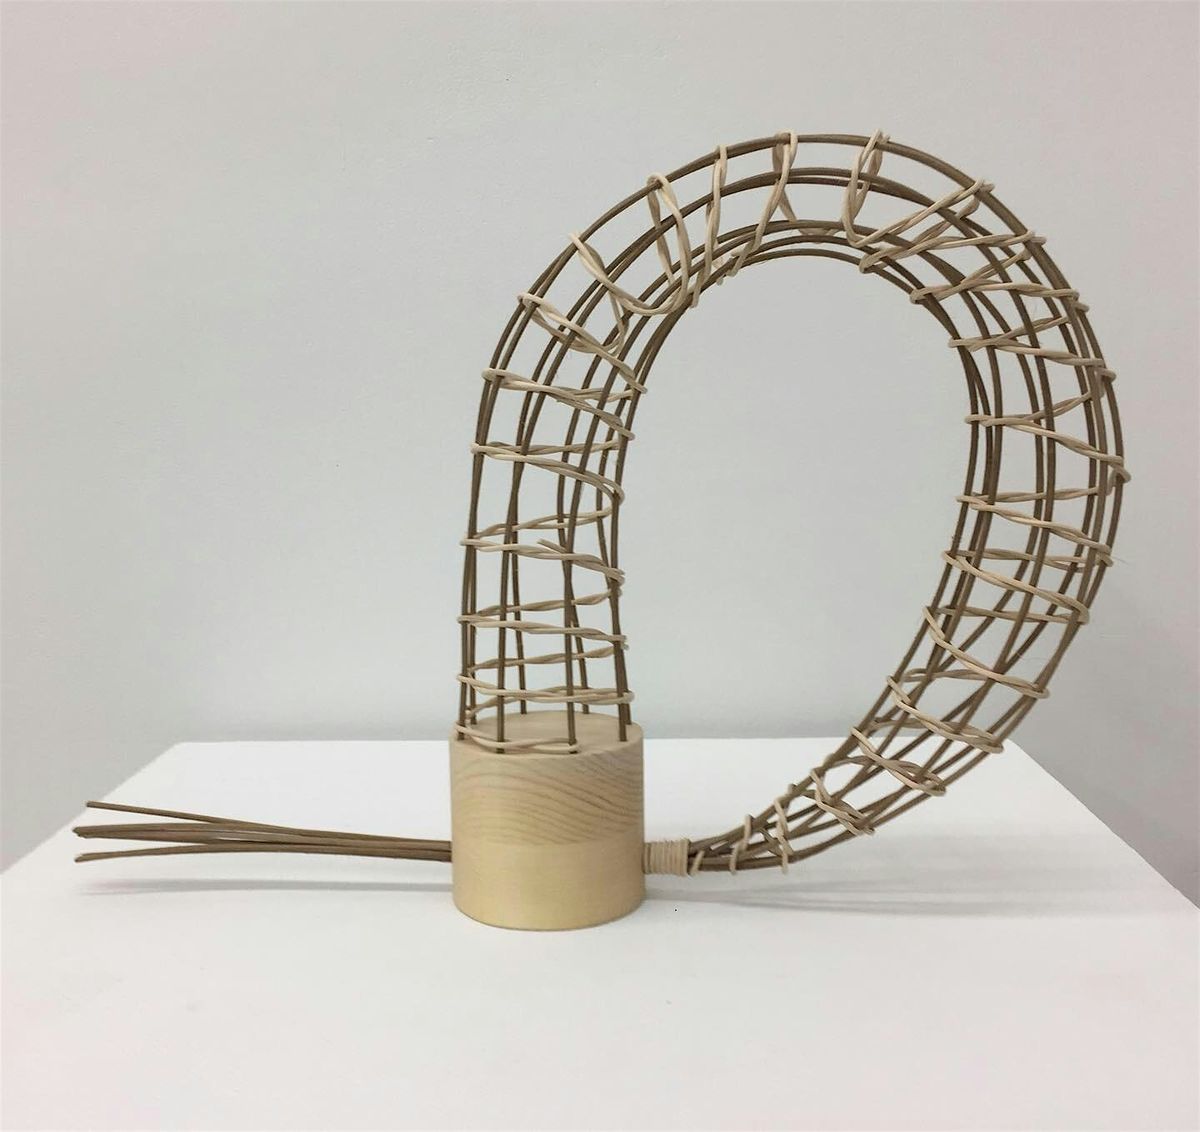 Sculptural Basketry with Teresa Audet